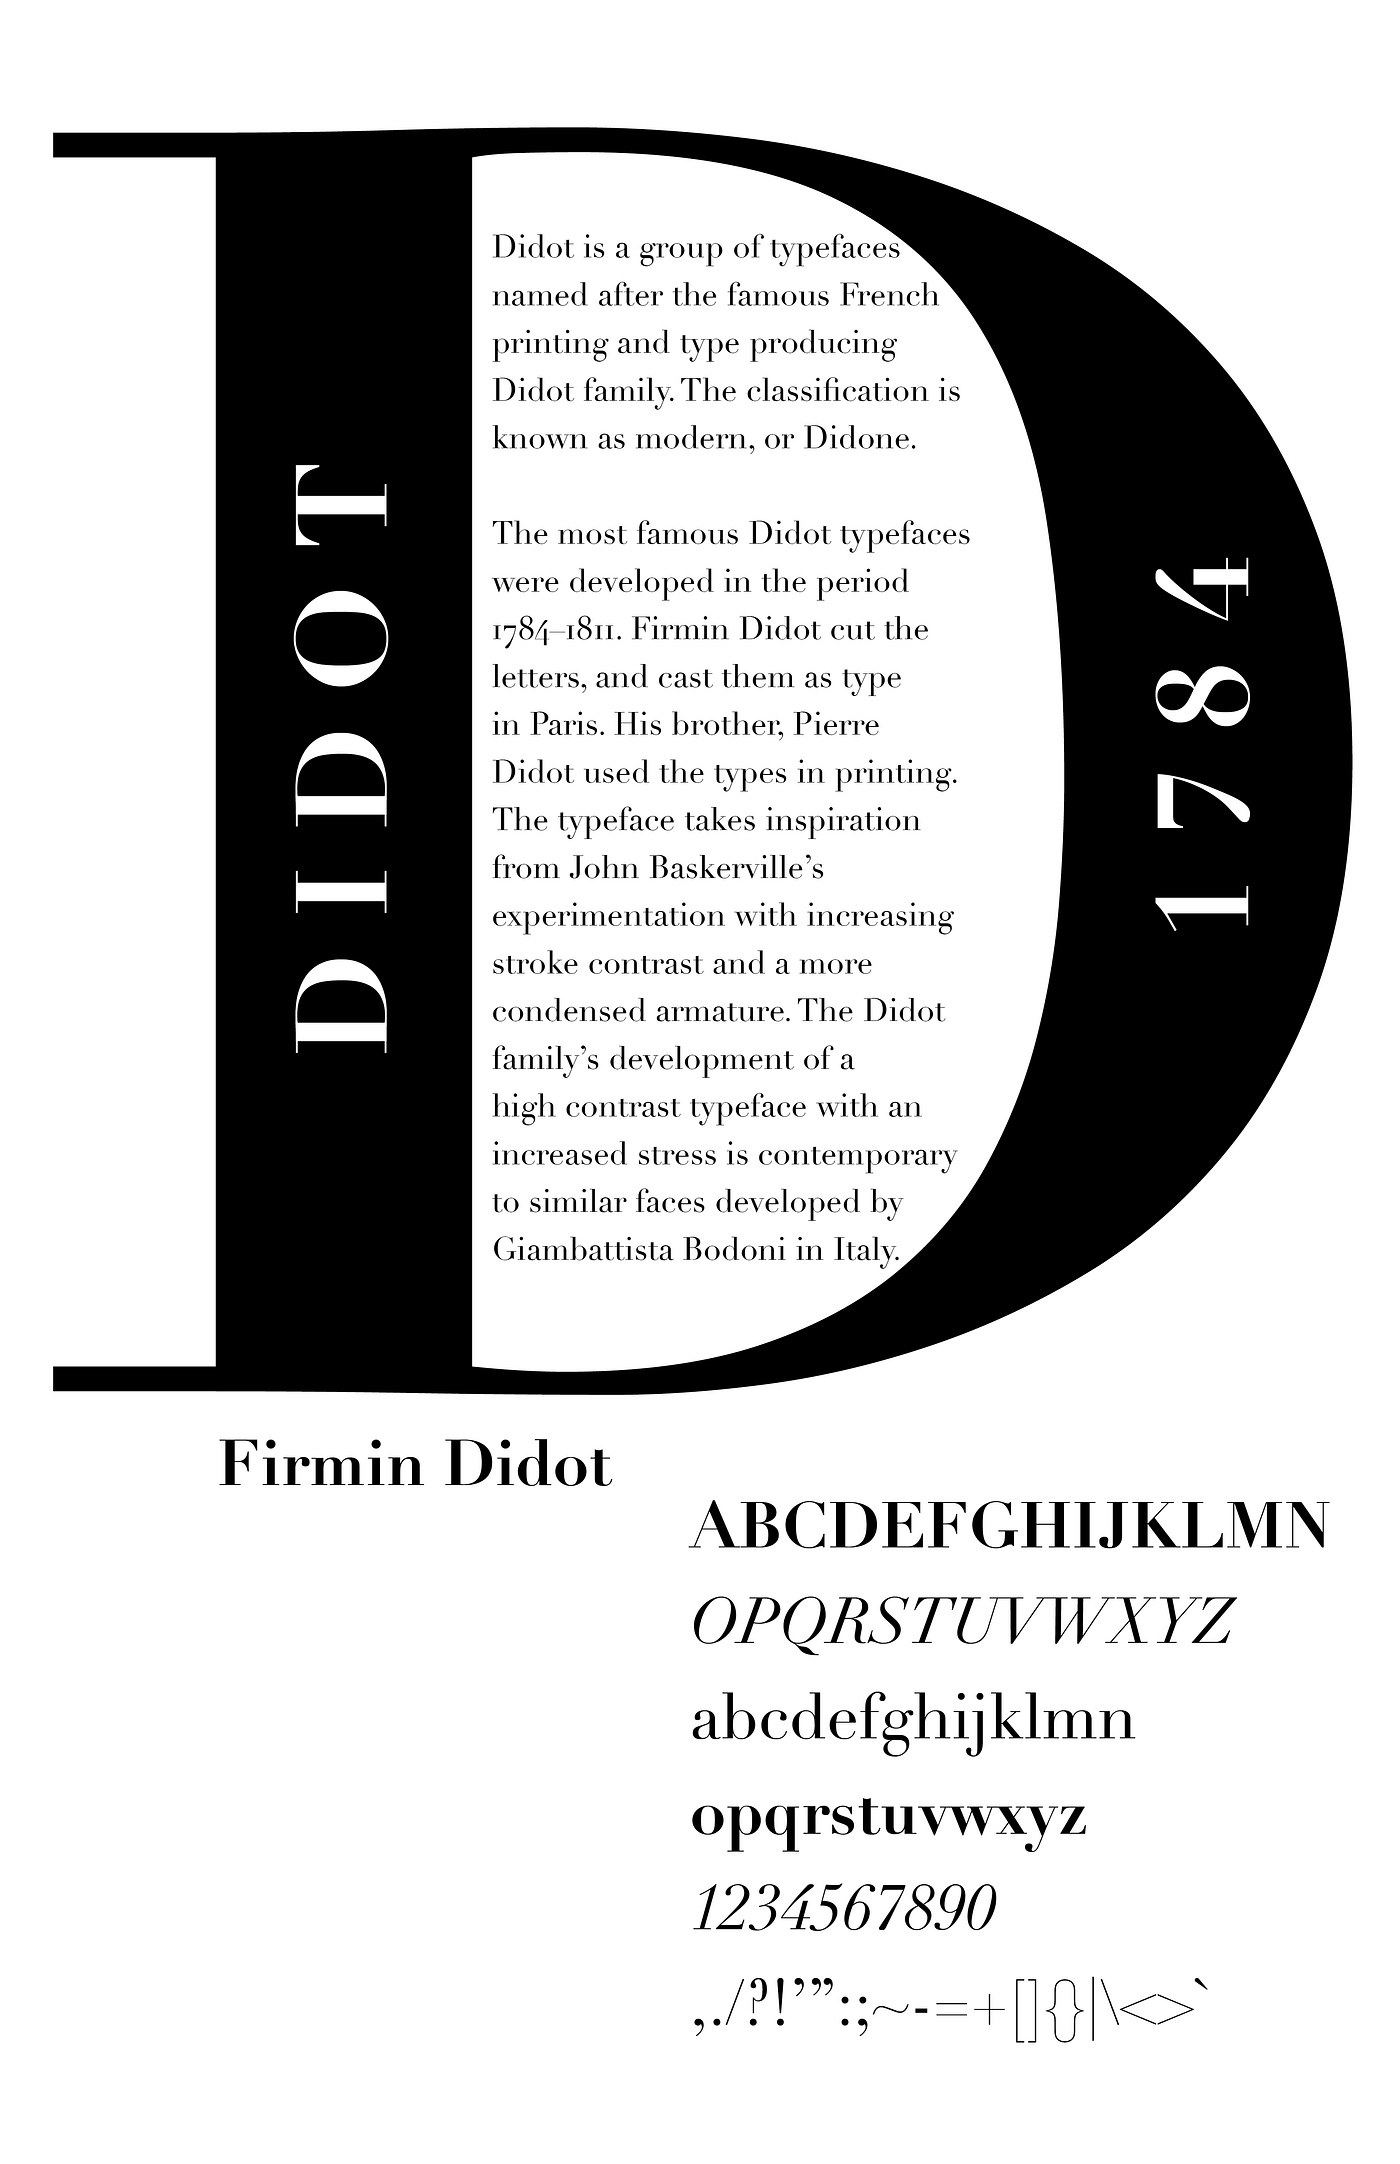 CDF Assignment 3 — Type Specimen Poster | by Laura Ding | Medium